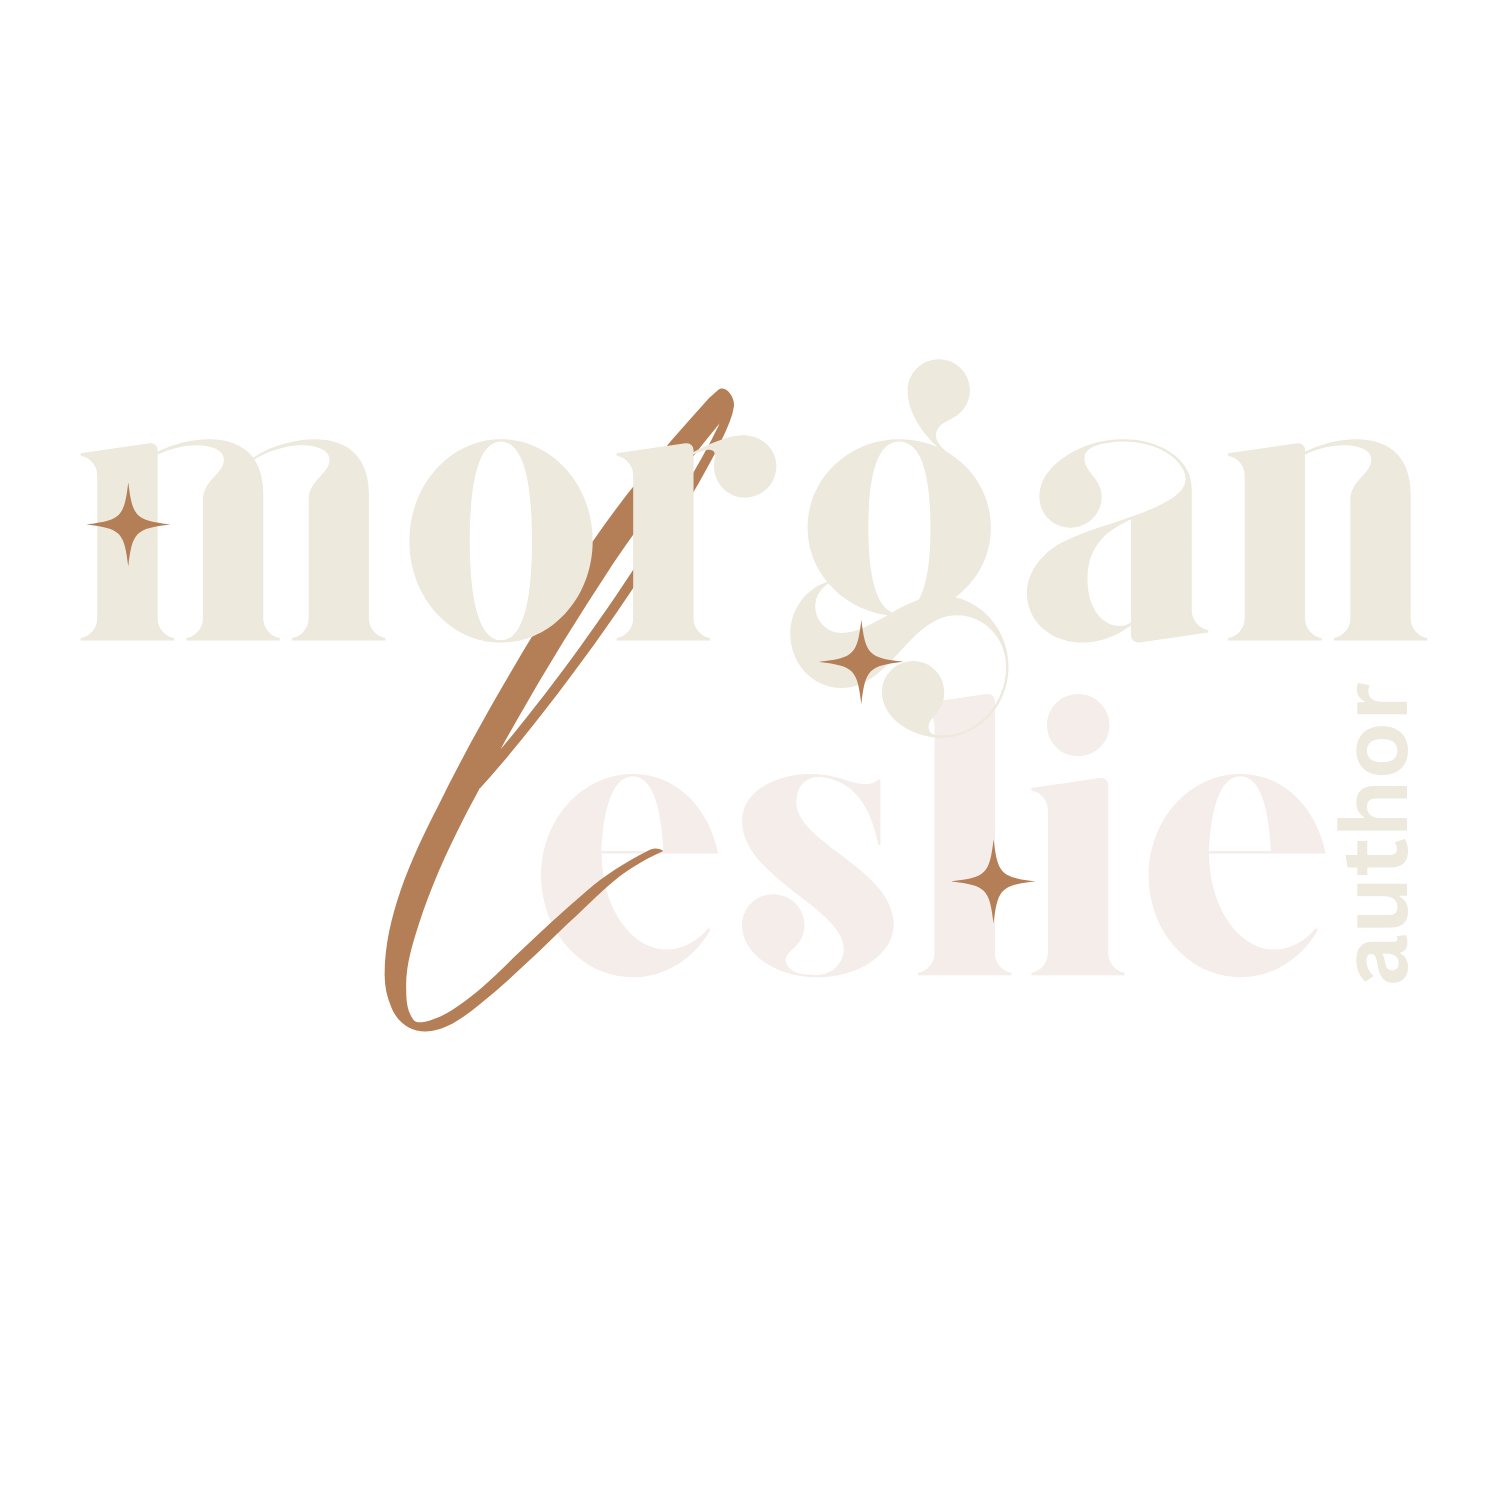 Morgan Leslie